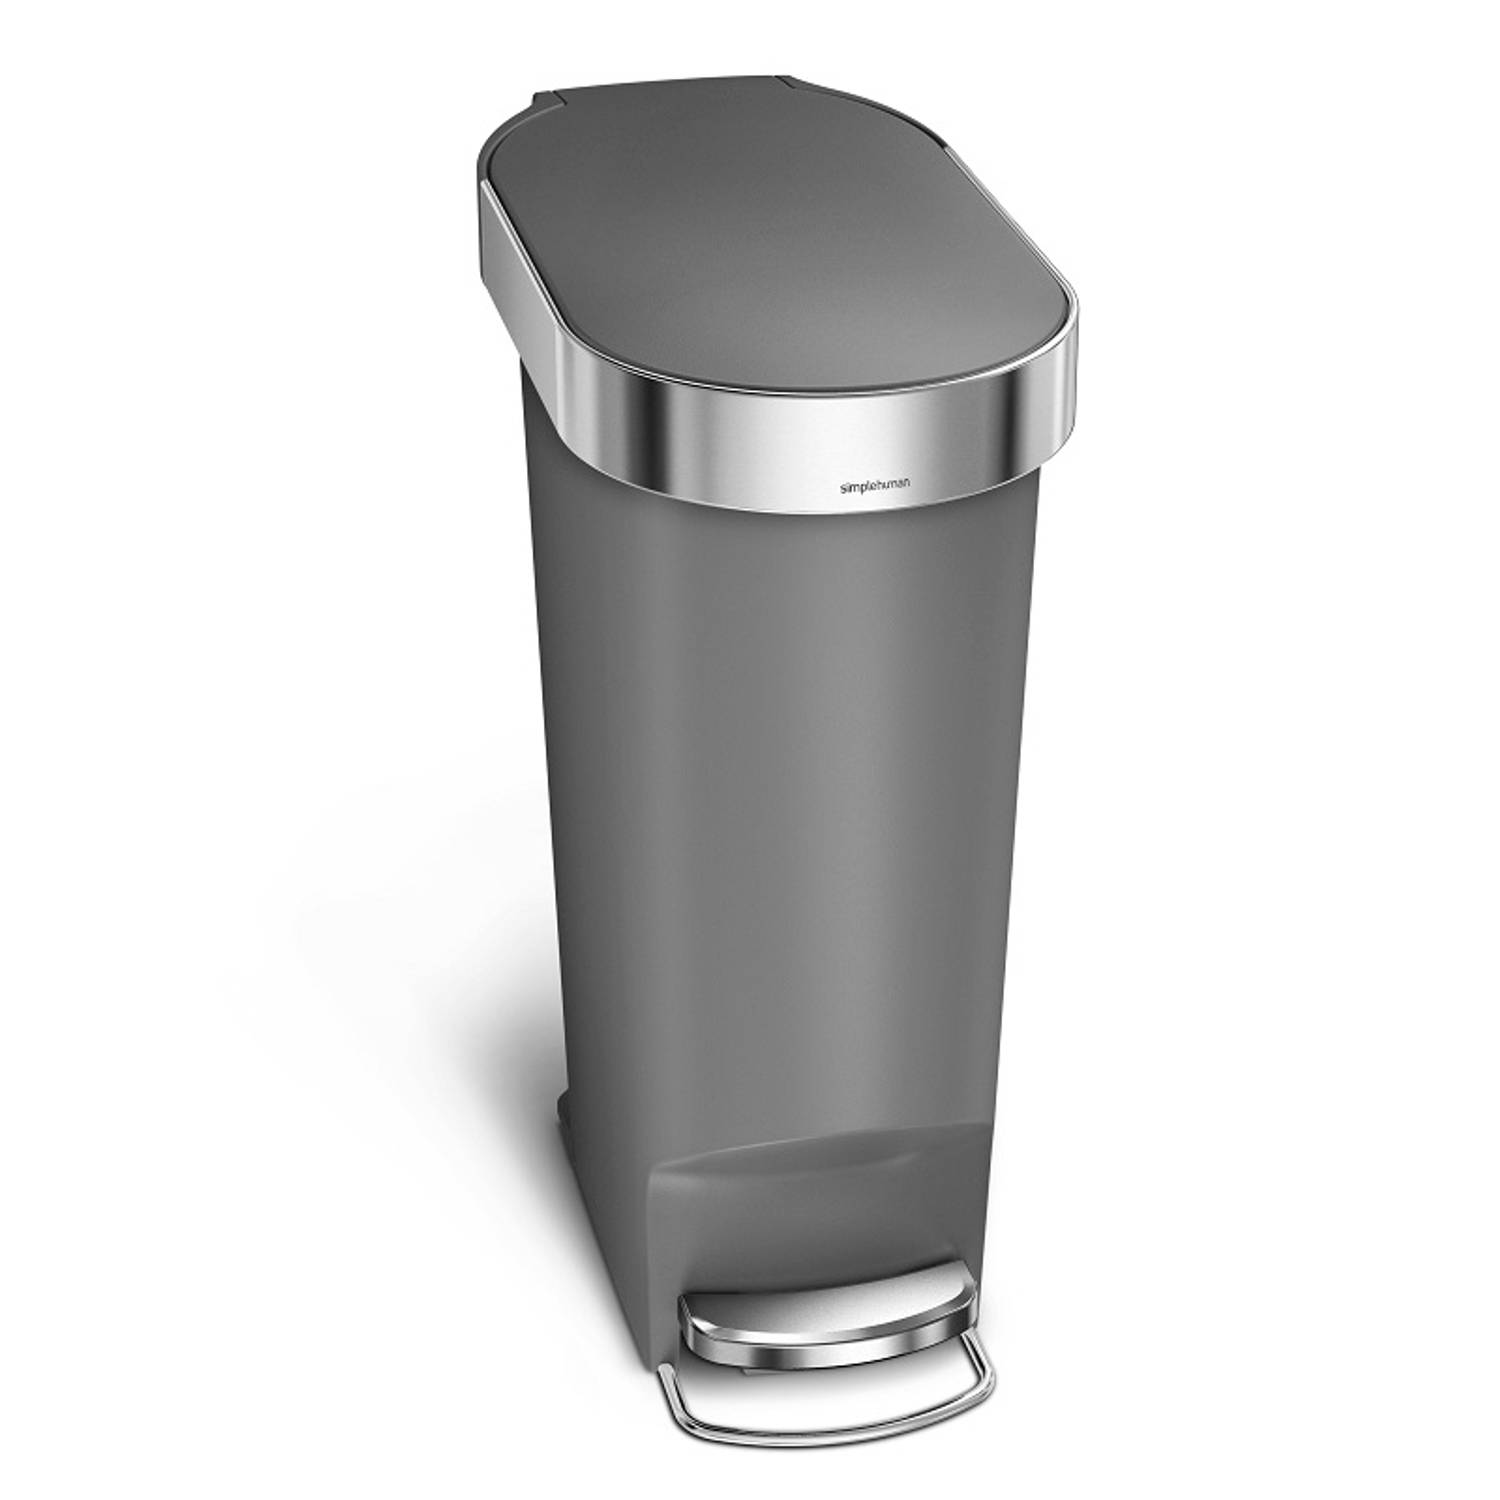 Weerkaatsing De gasten verdund Afvalemmer Slim - 40 liter - Grijs - Simplehuman | Blokker